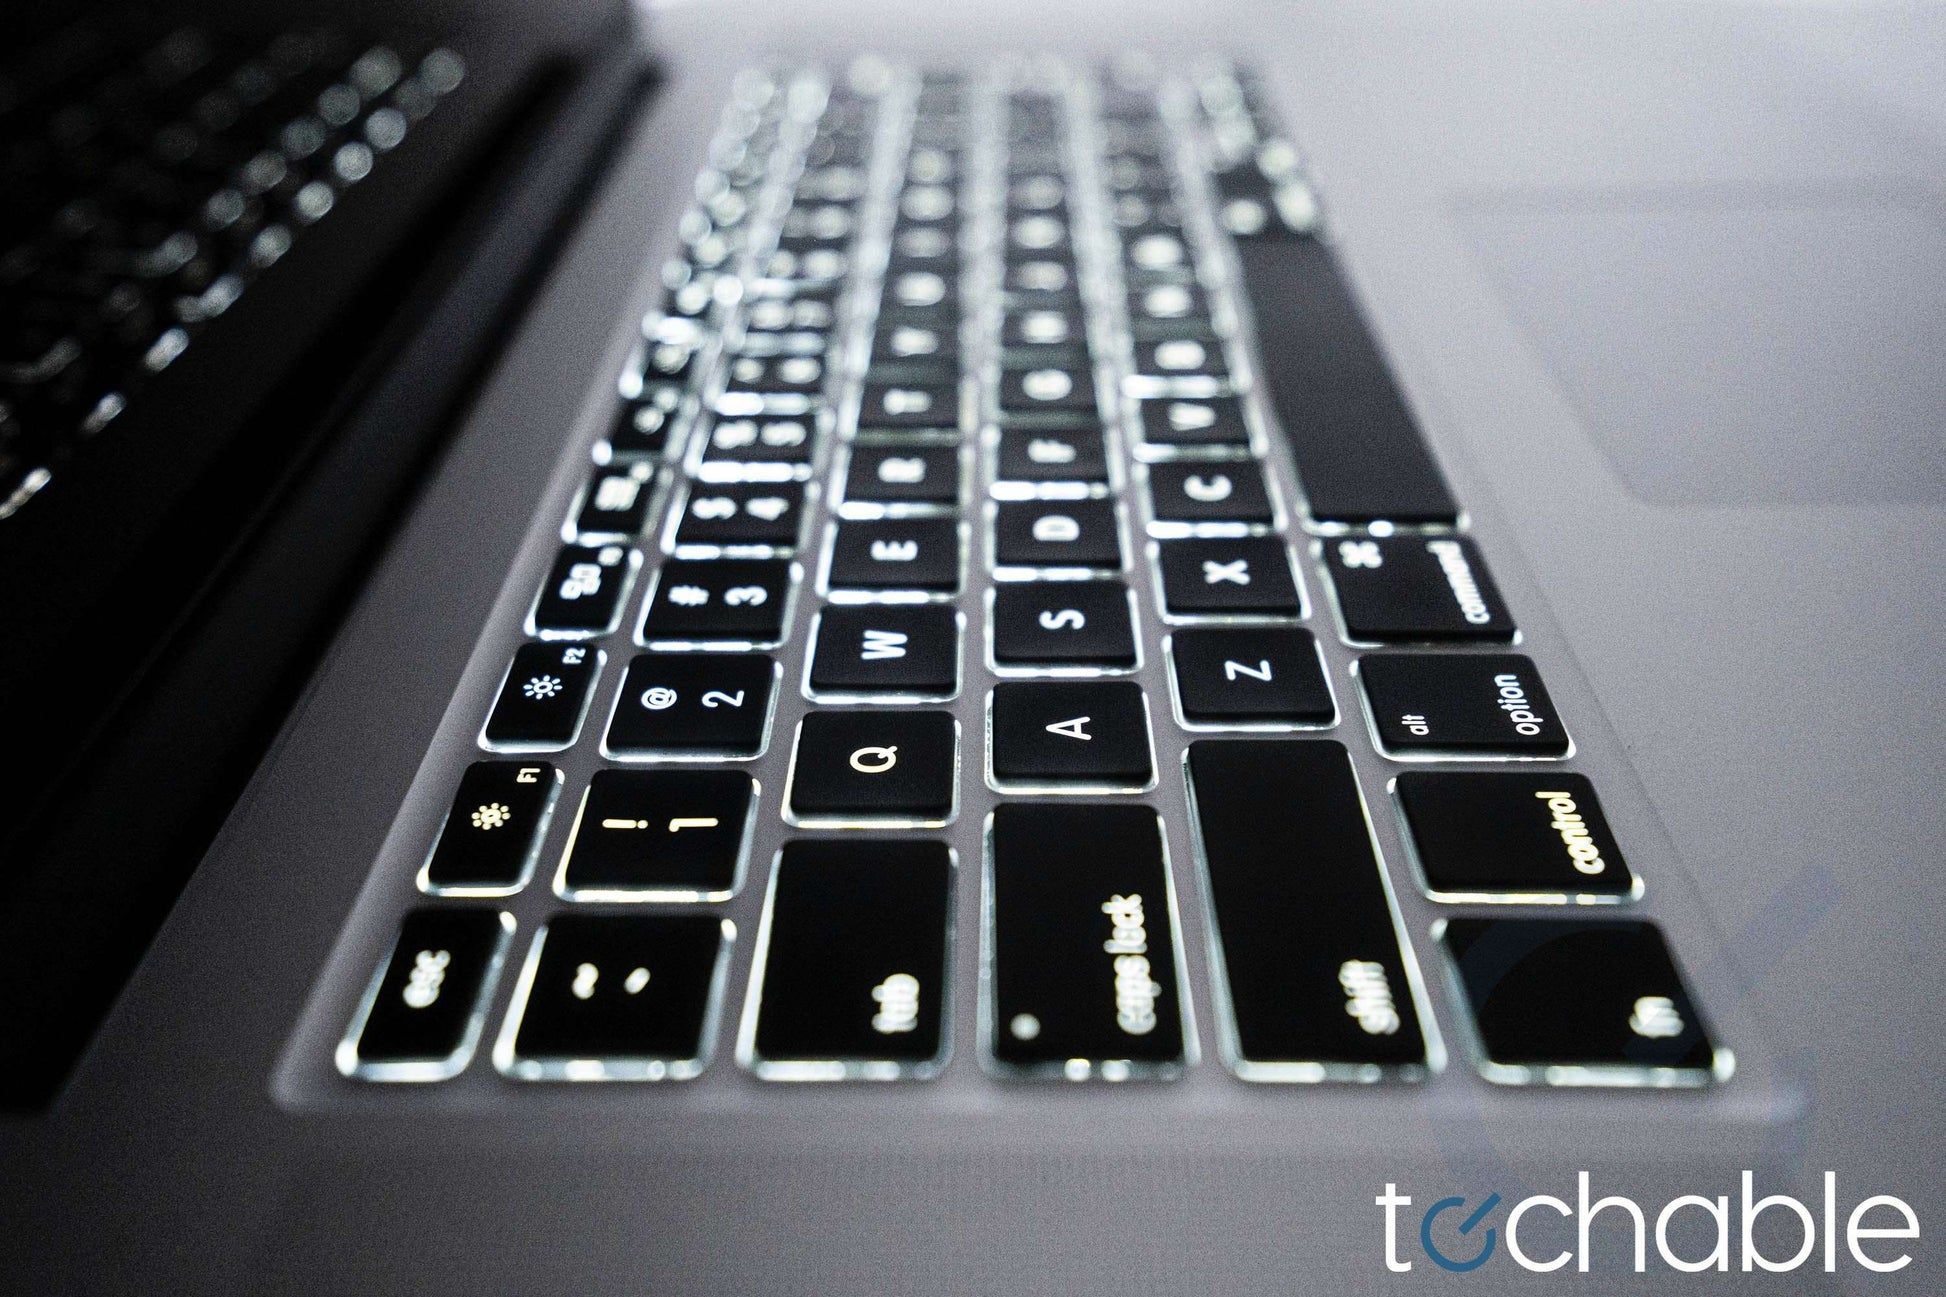 Apple Macbook Pro 17-Inch 2.53GHz Core i5 (Customize IT)